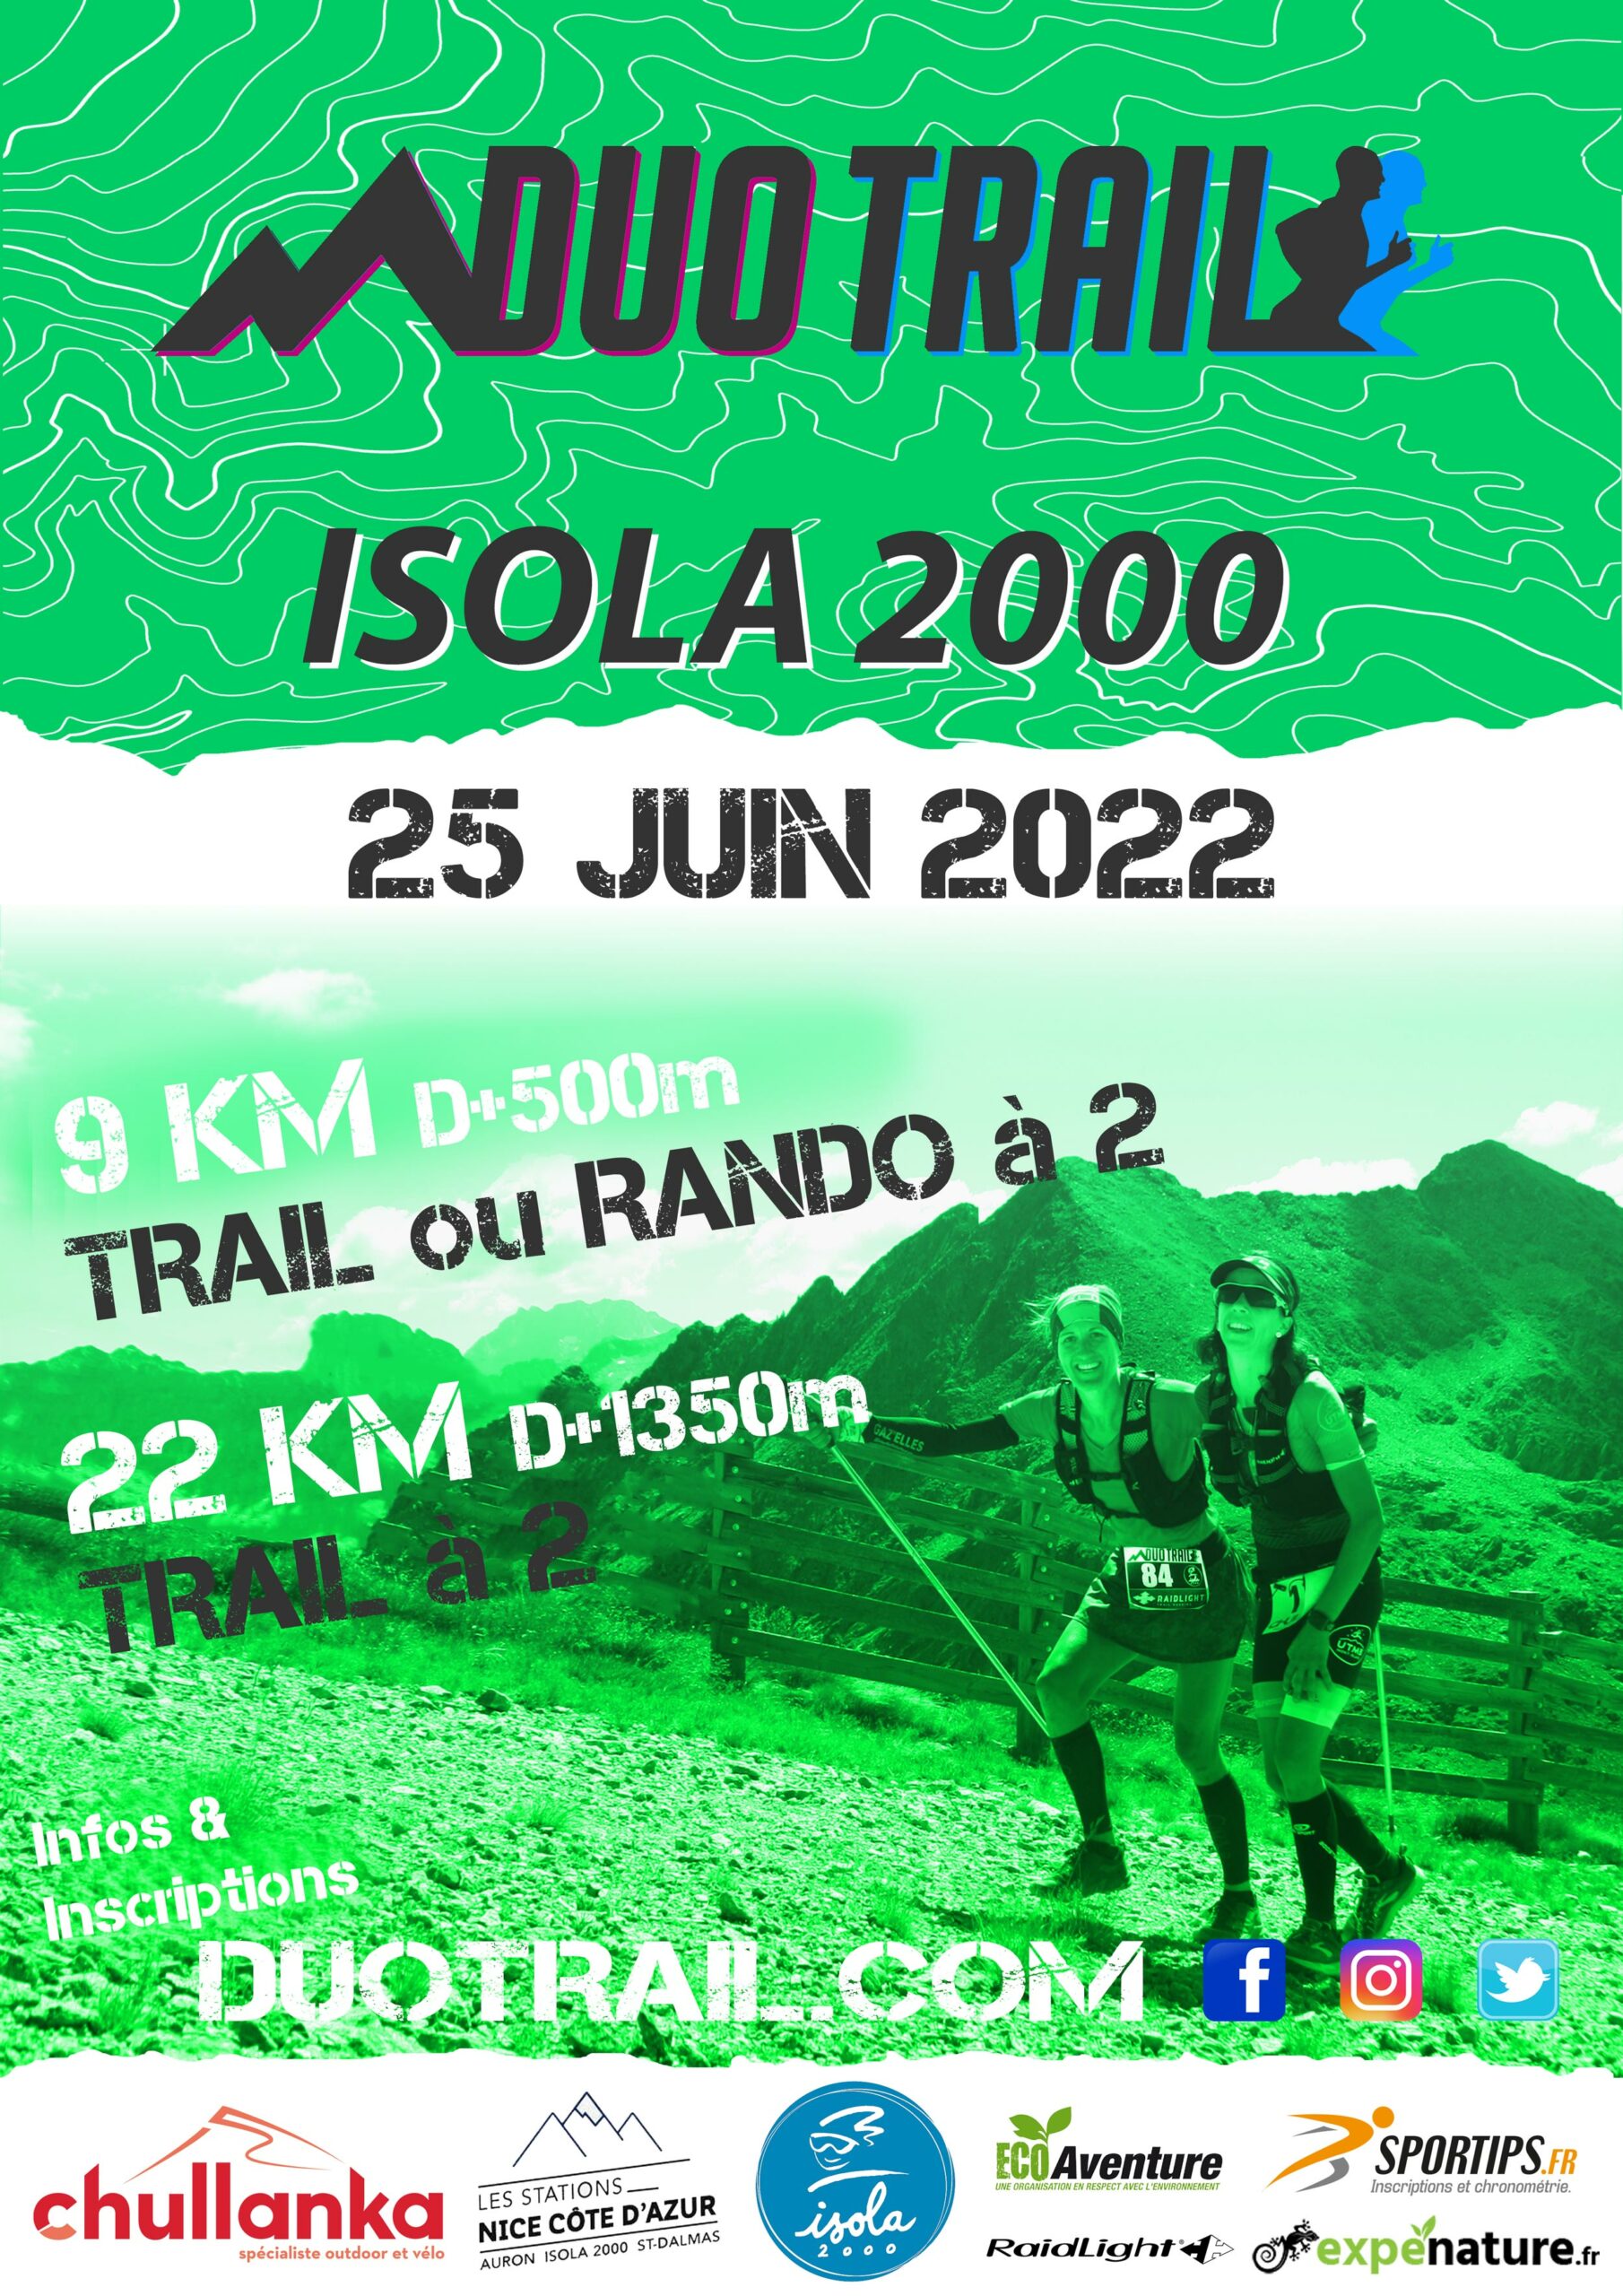 DUO-TRAIL-MERCANTOUR-ISOLA-2000